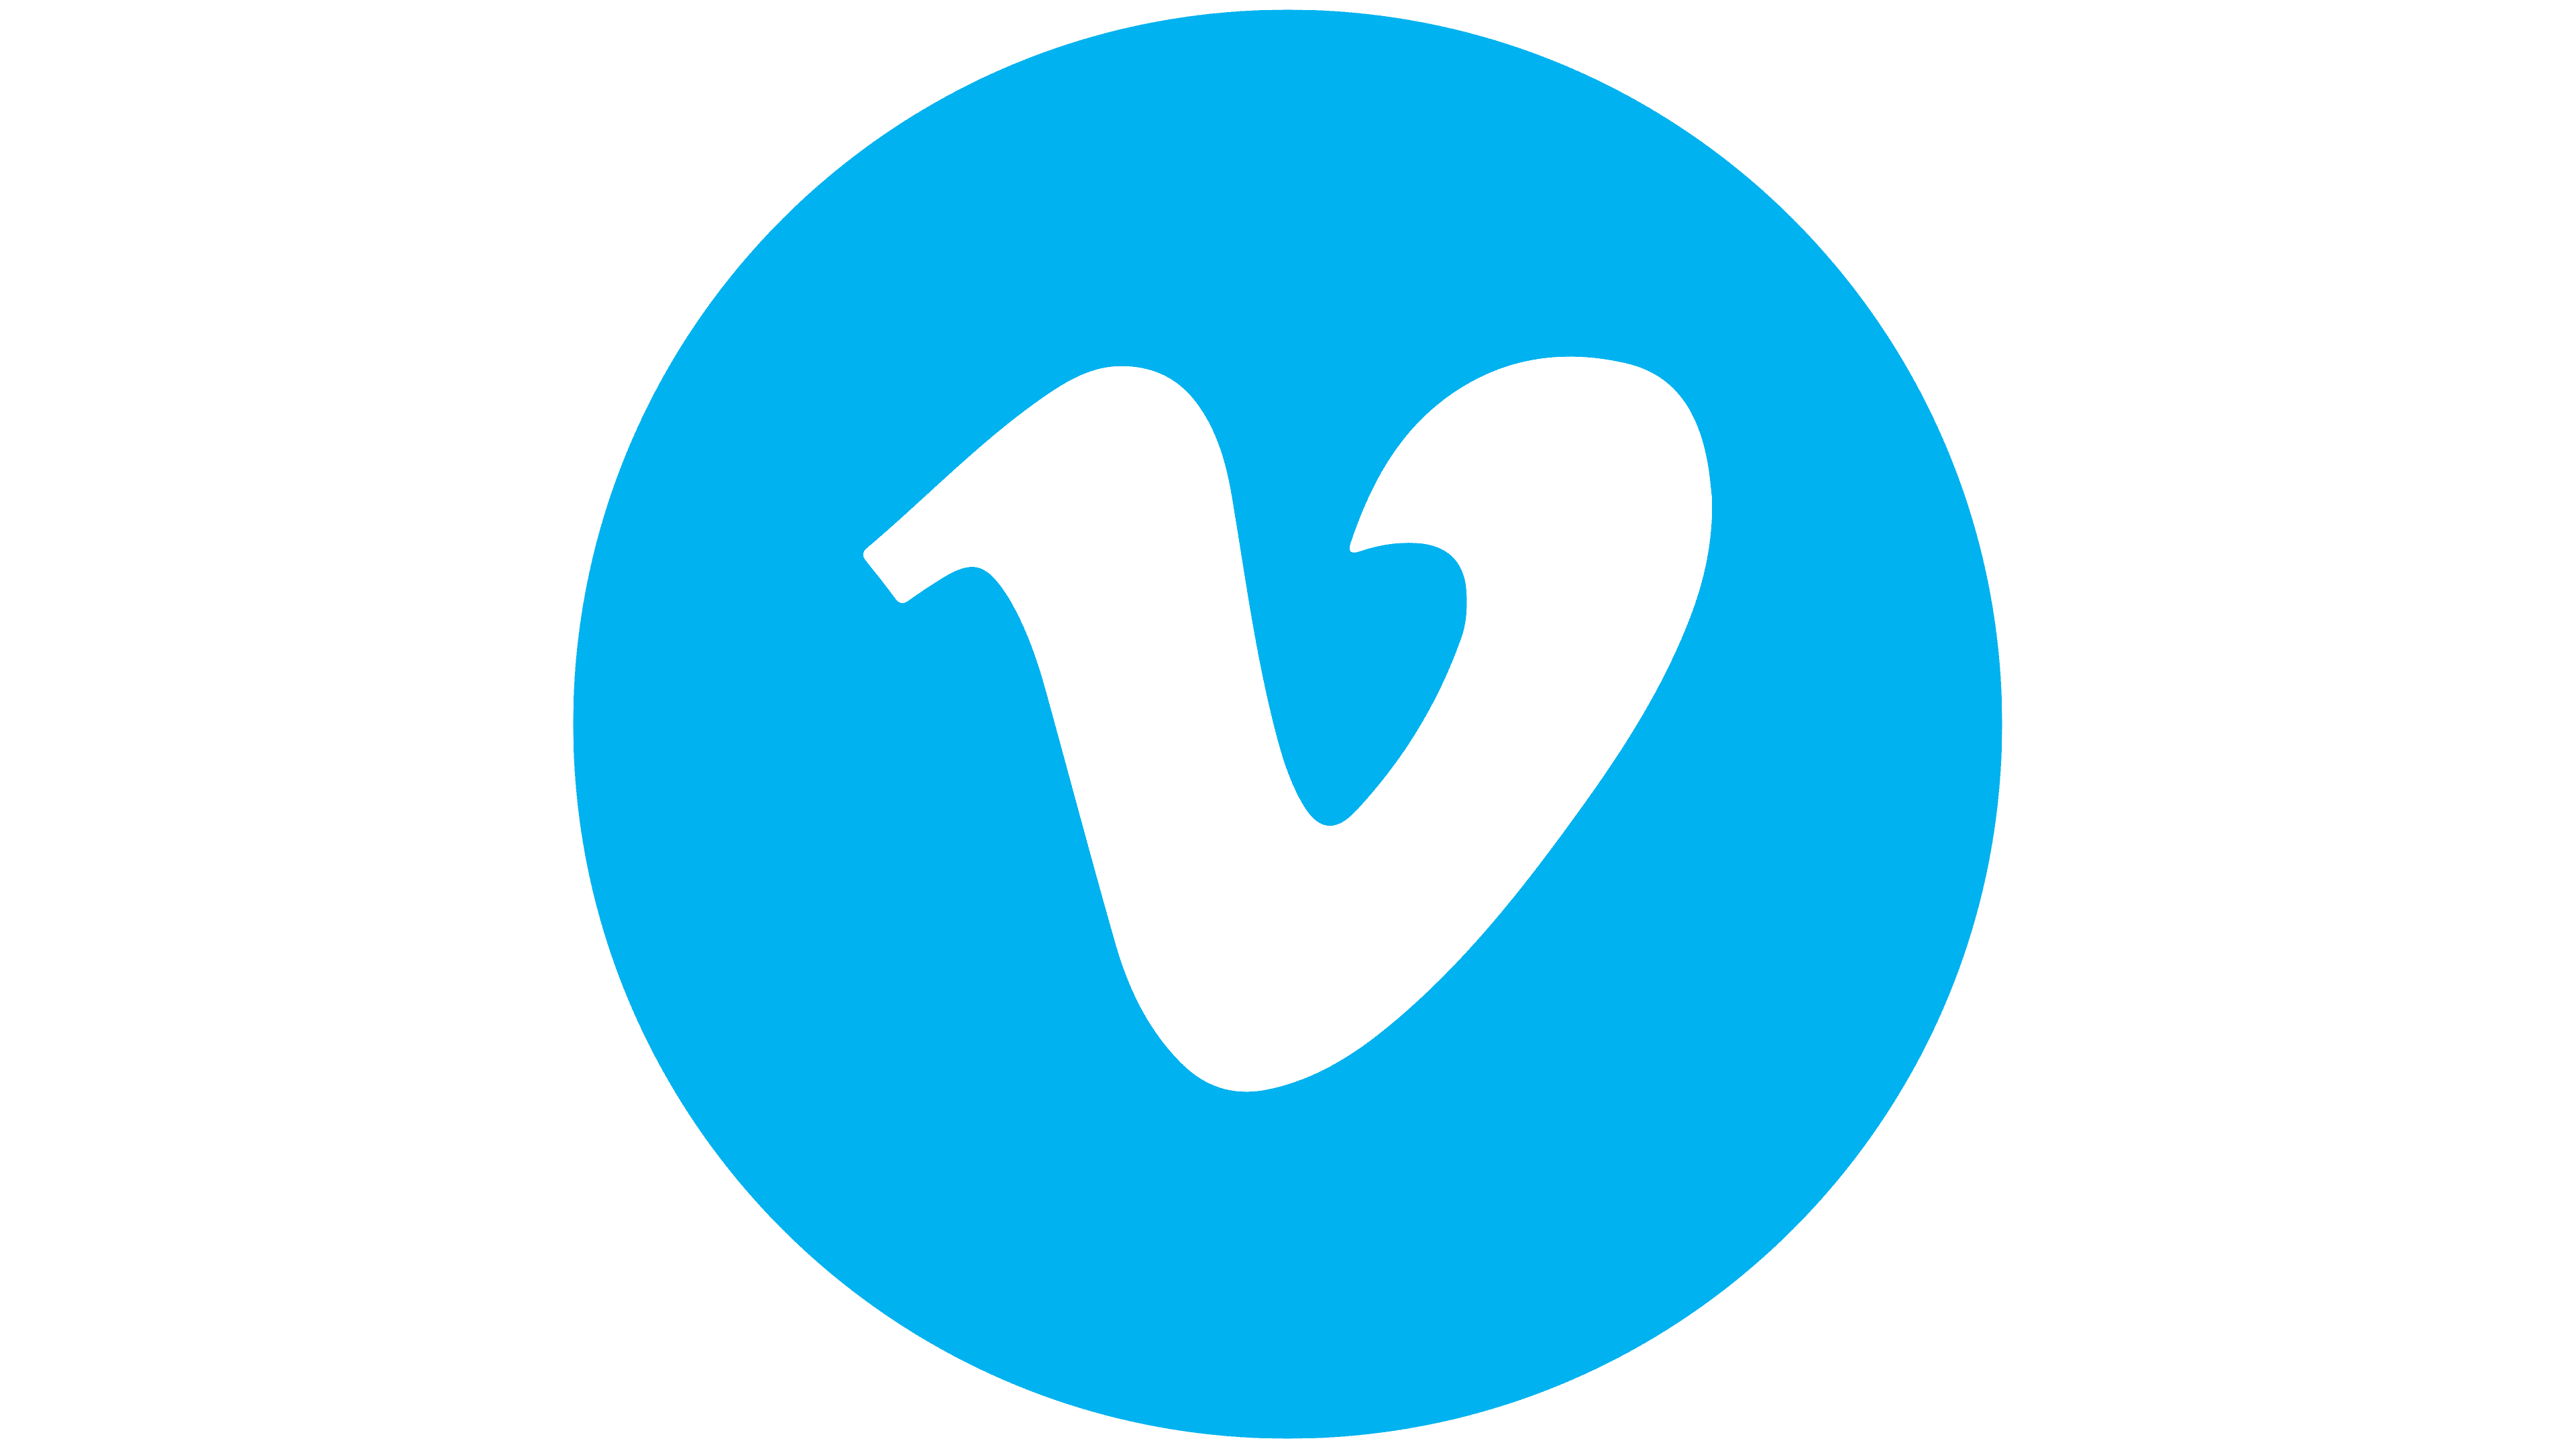 vimeo emblem